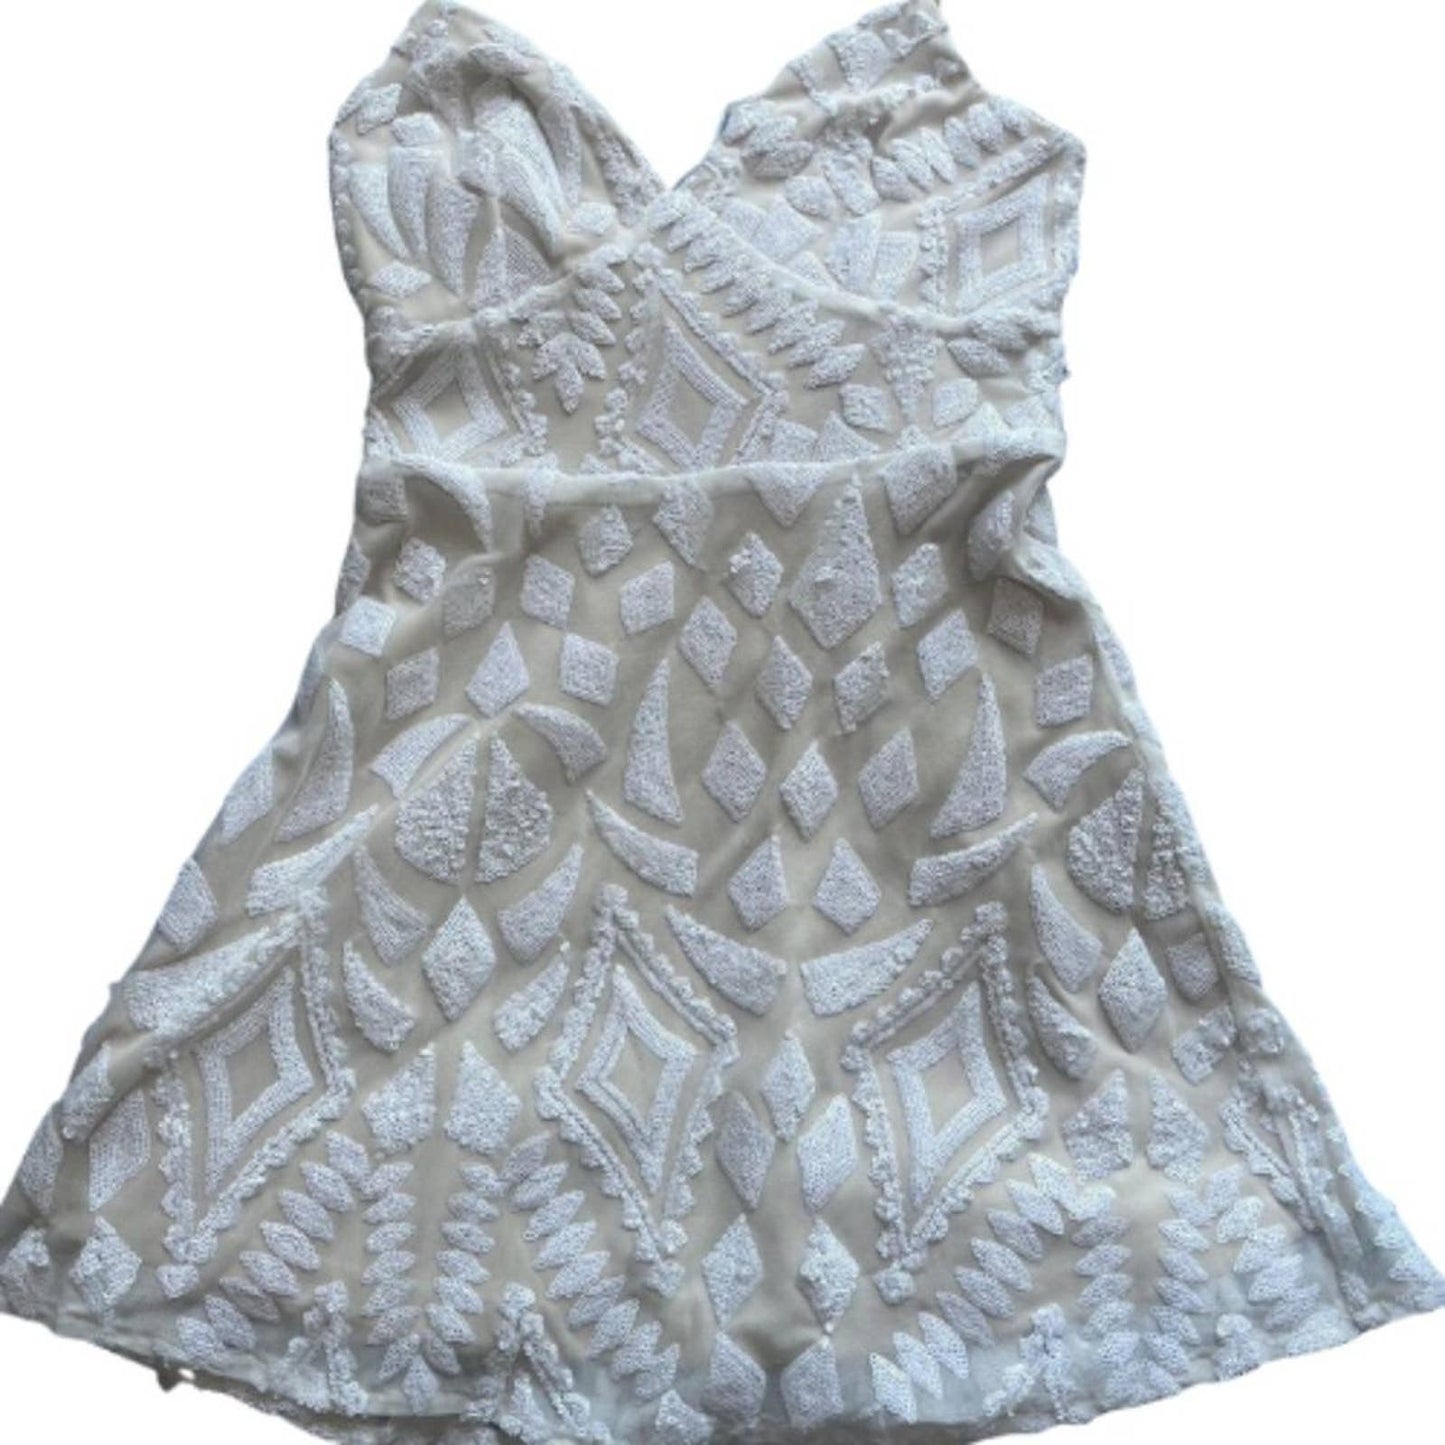 Superdown Tiff Mini Dress in Nude and White NWT Size Small